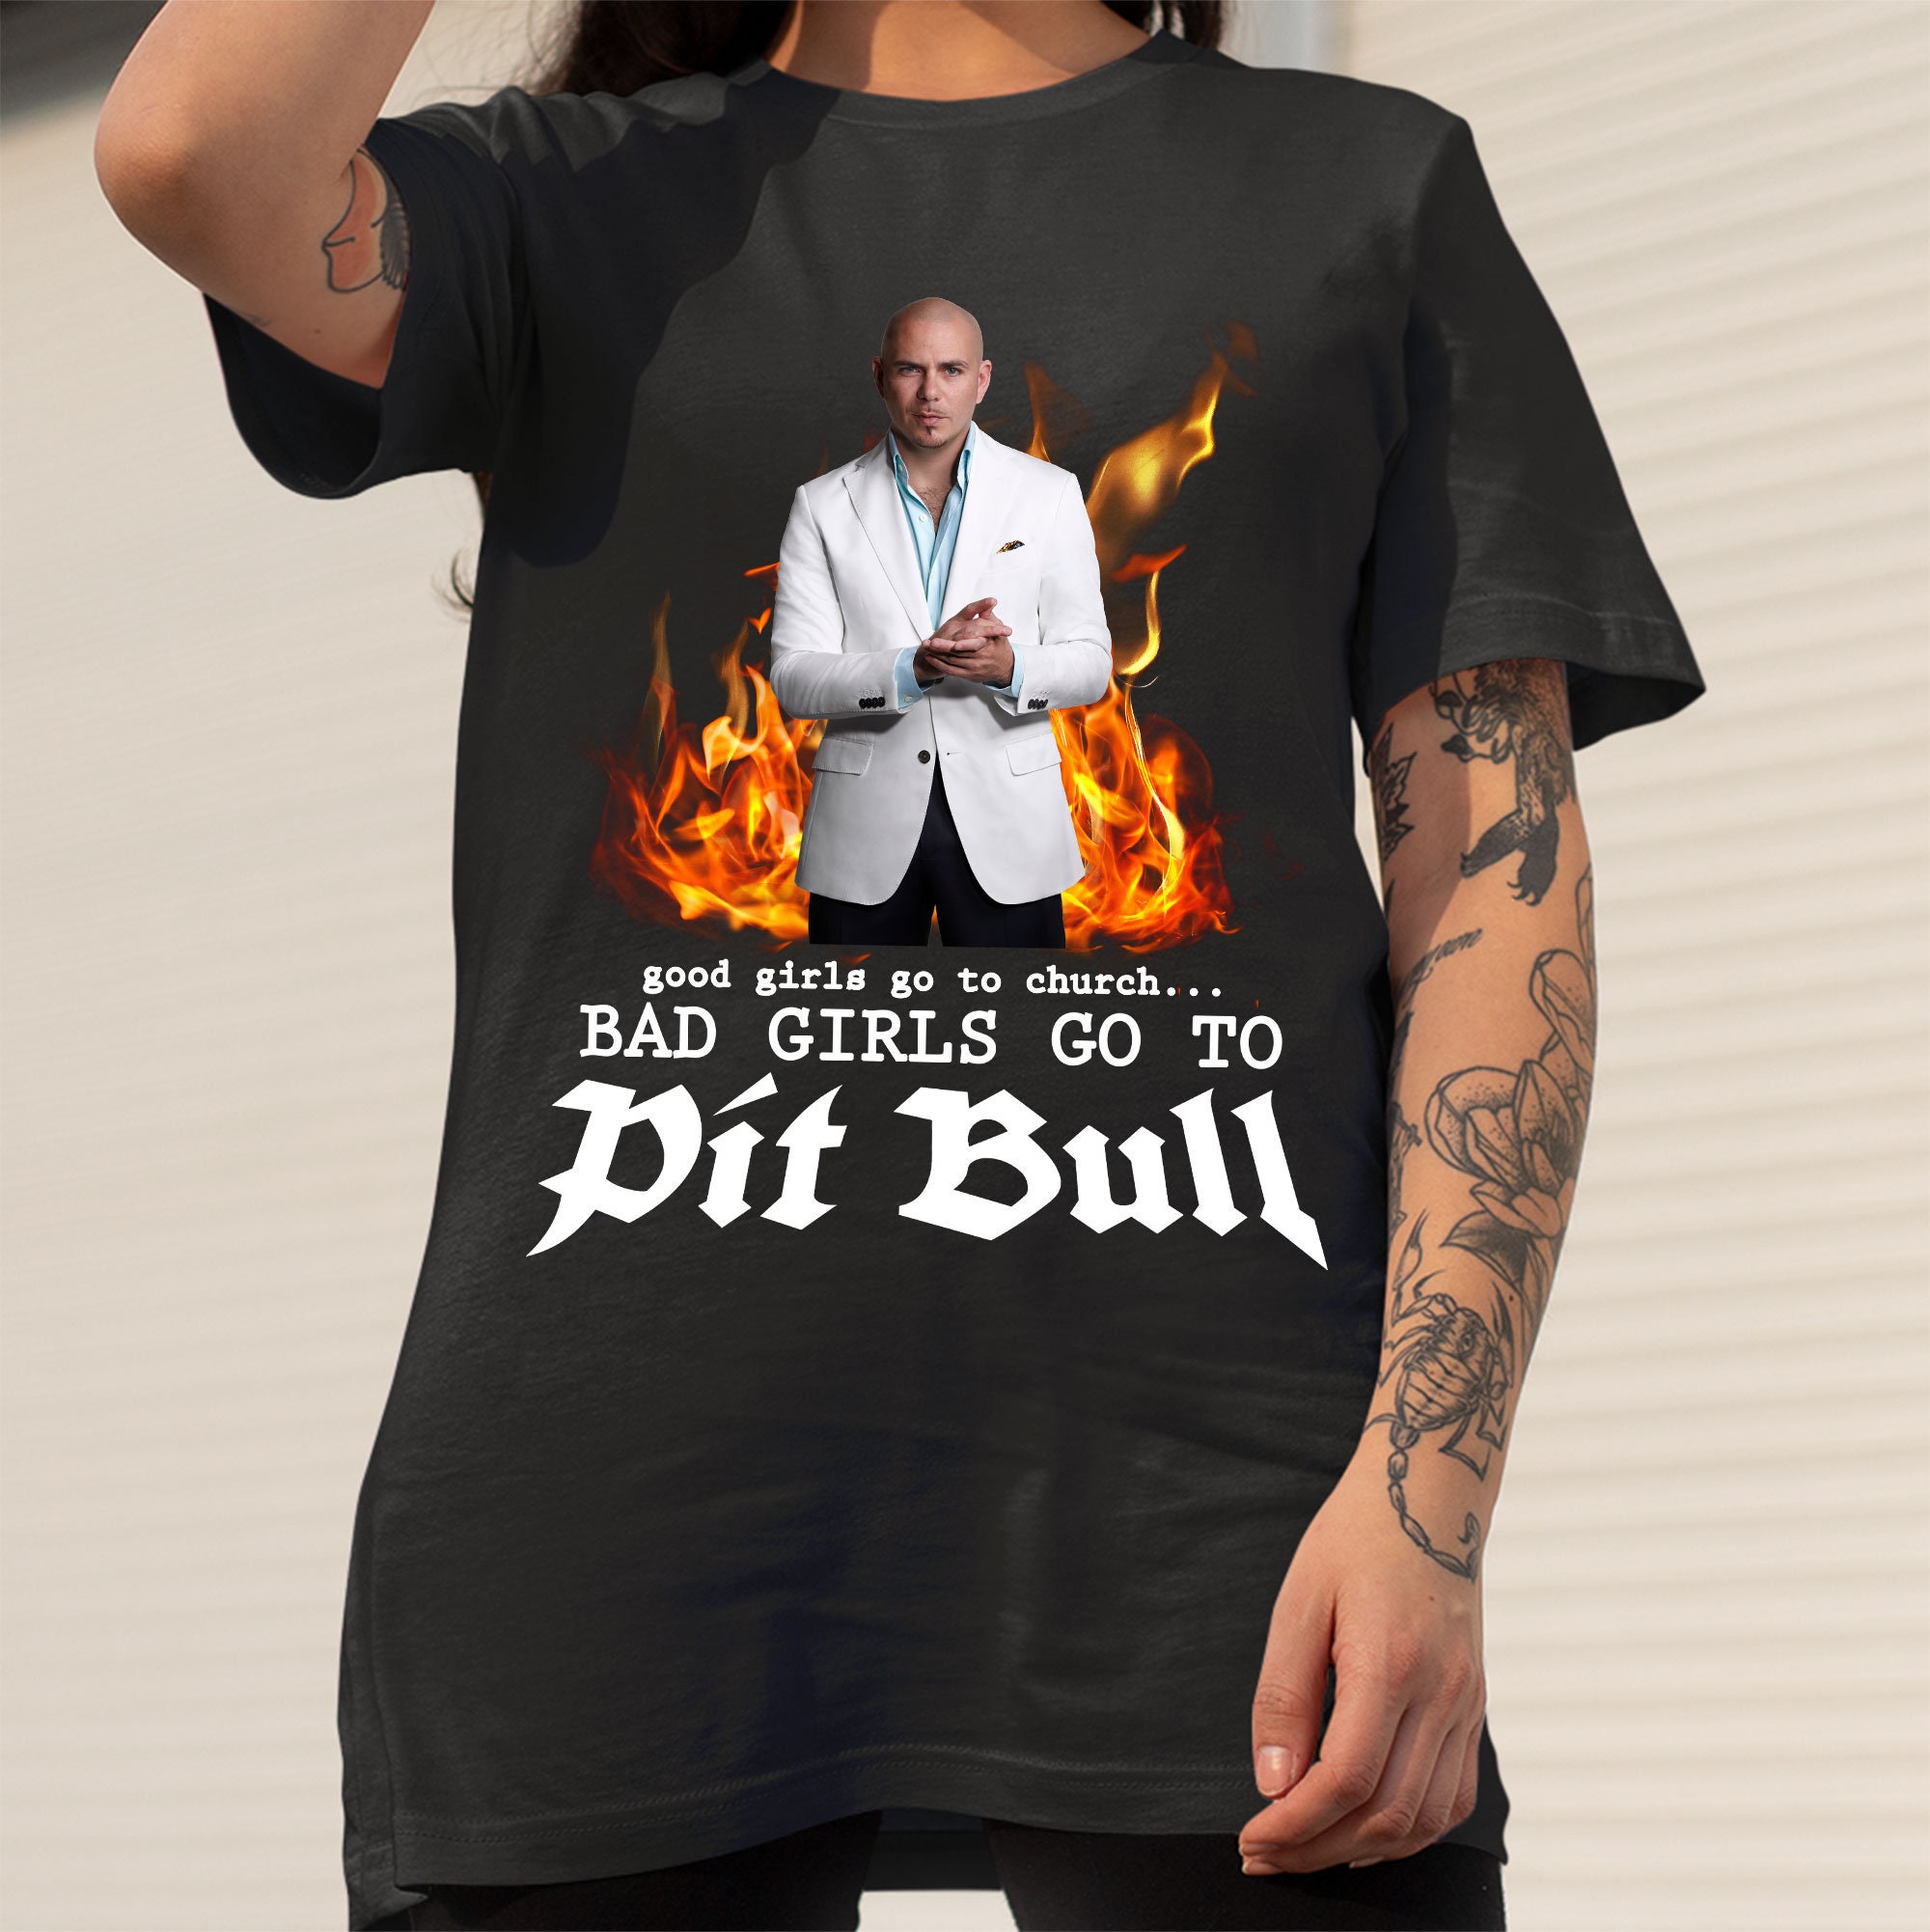 Discover Good Girls Go To Church Bad Girls Go To Pitbull Shirt, Armando Cristian Prez Shirt, Hip Hop Shirt